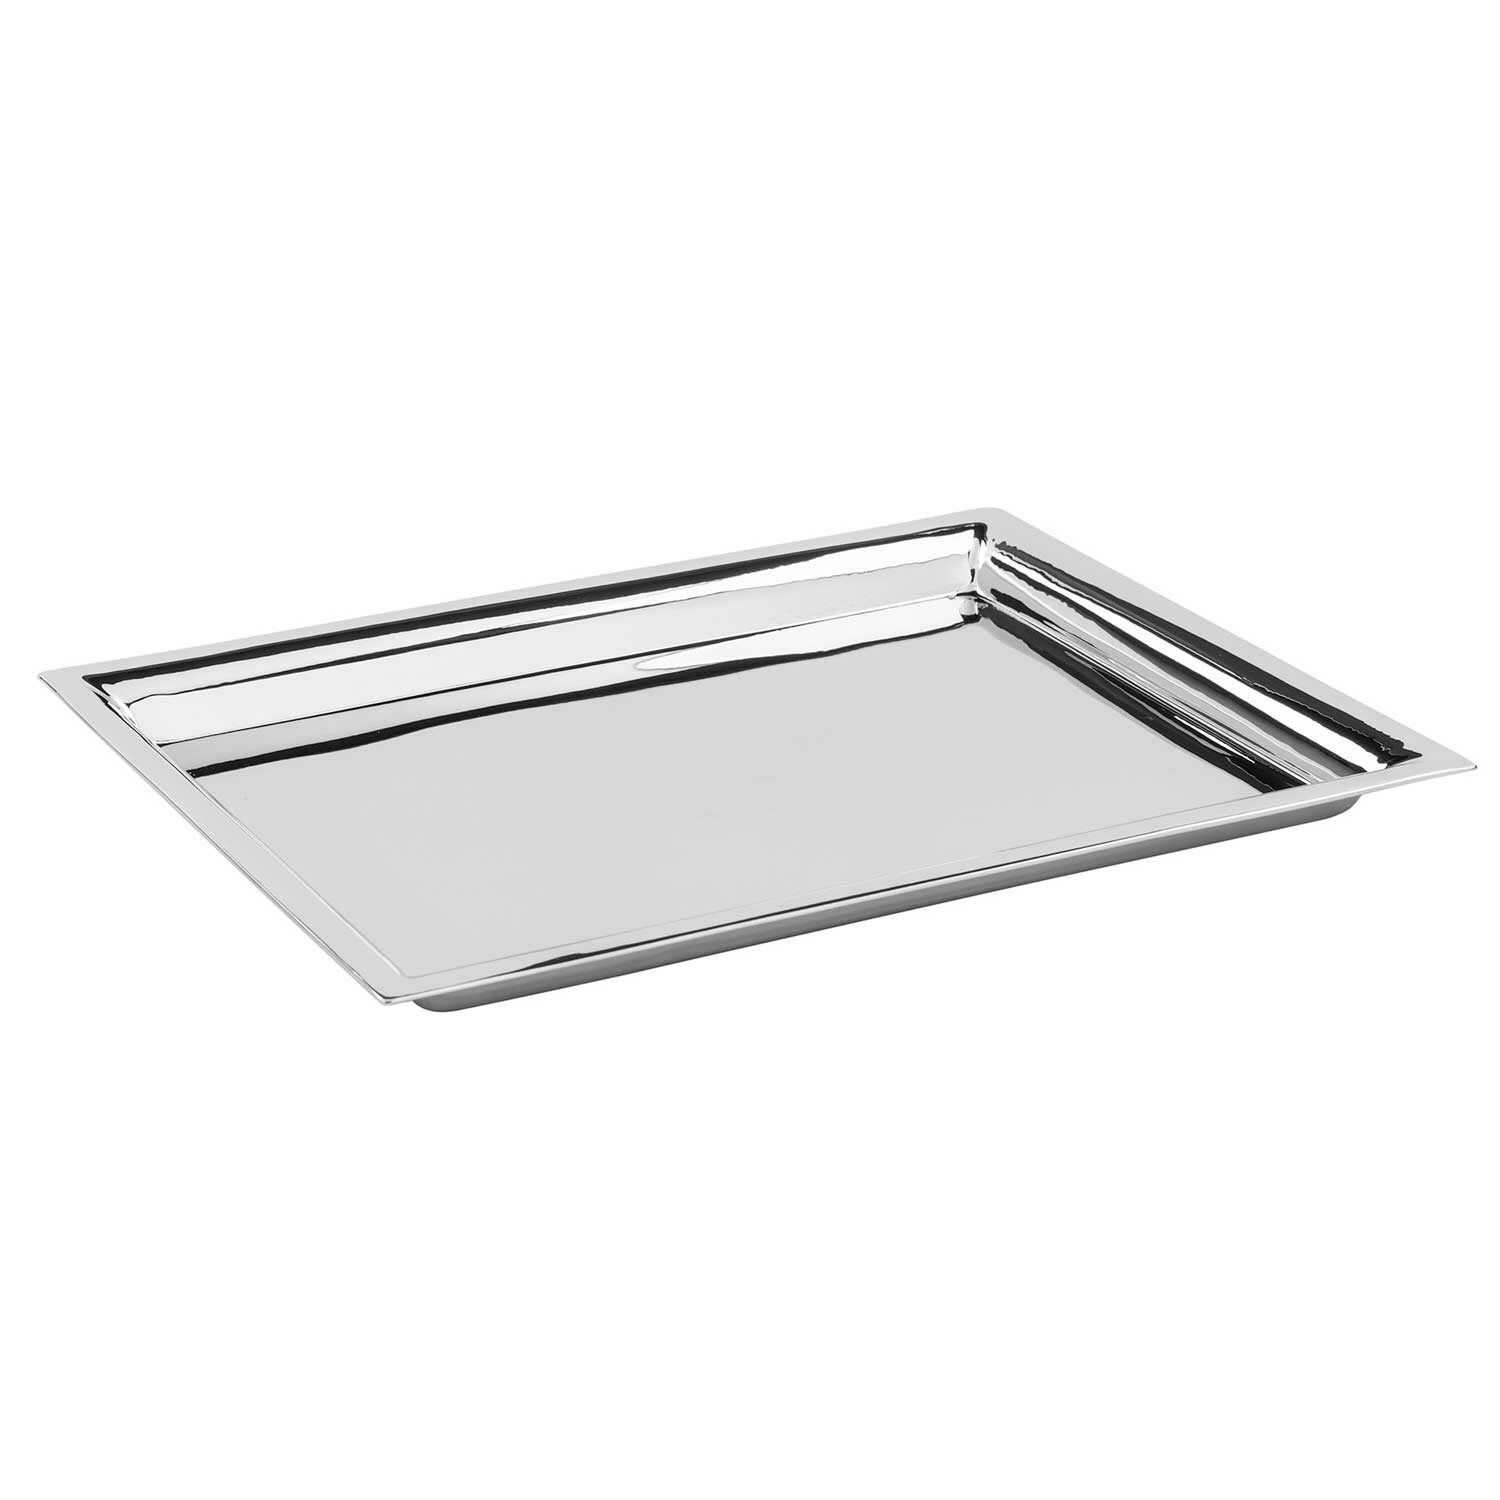 NAGANO trays rectangular